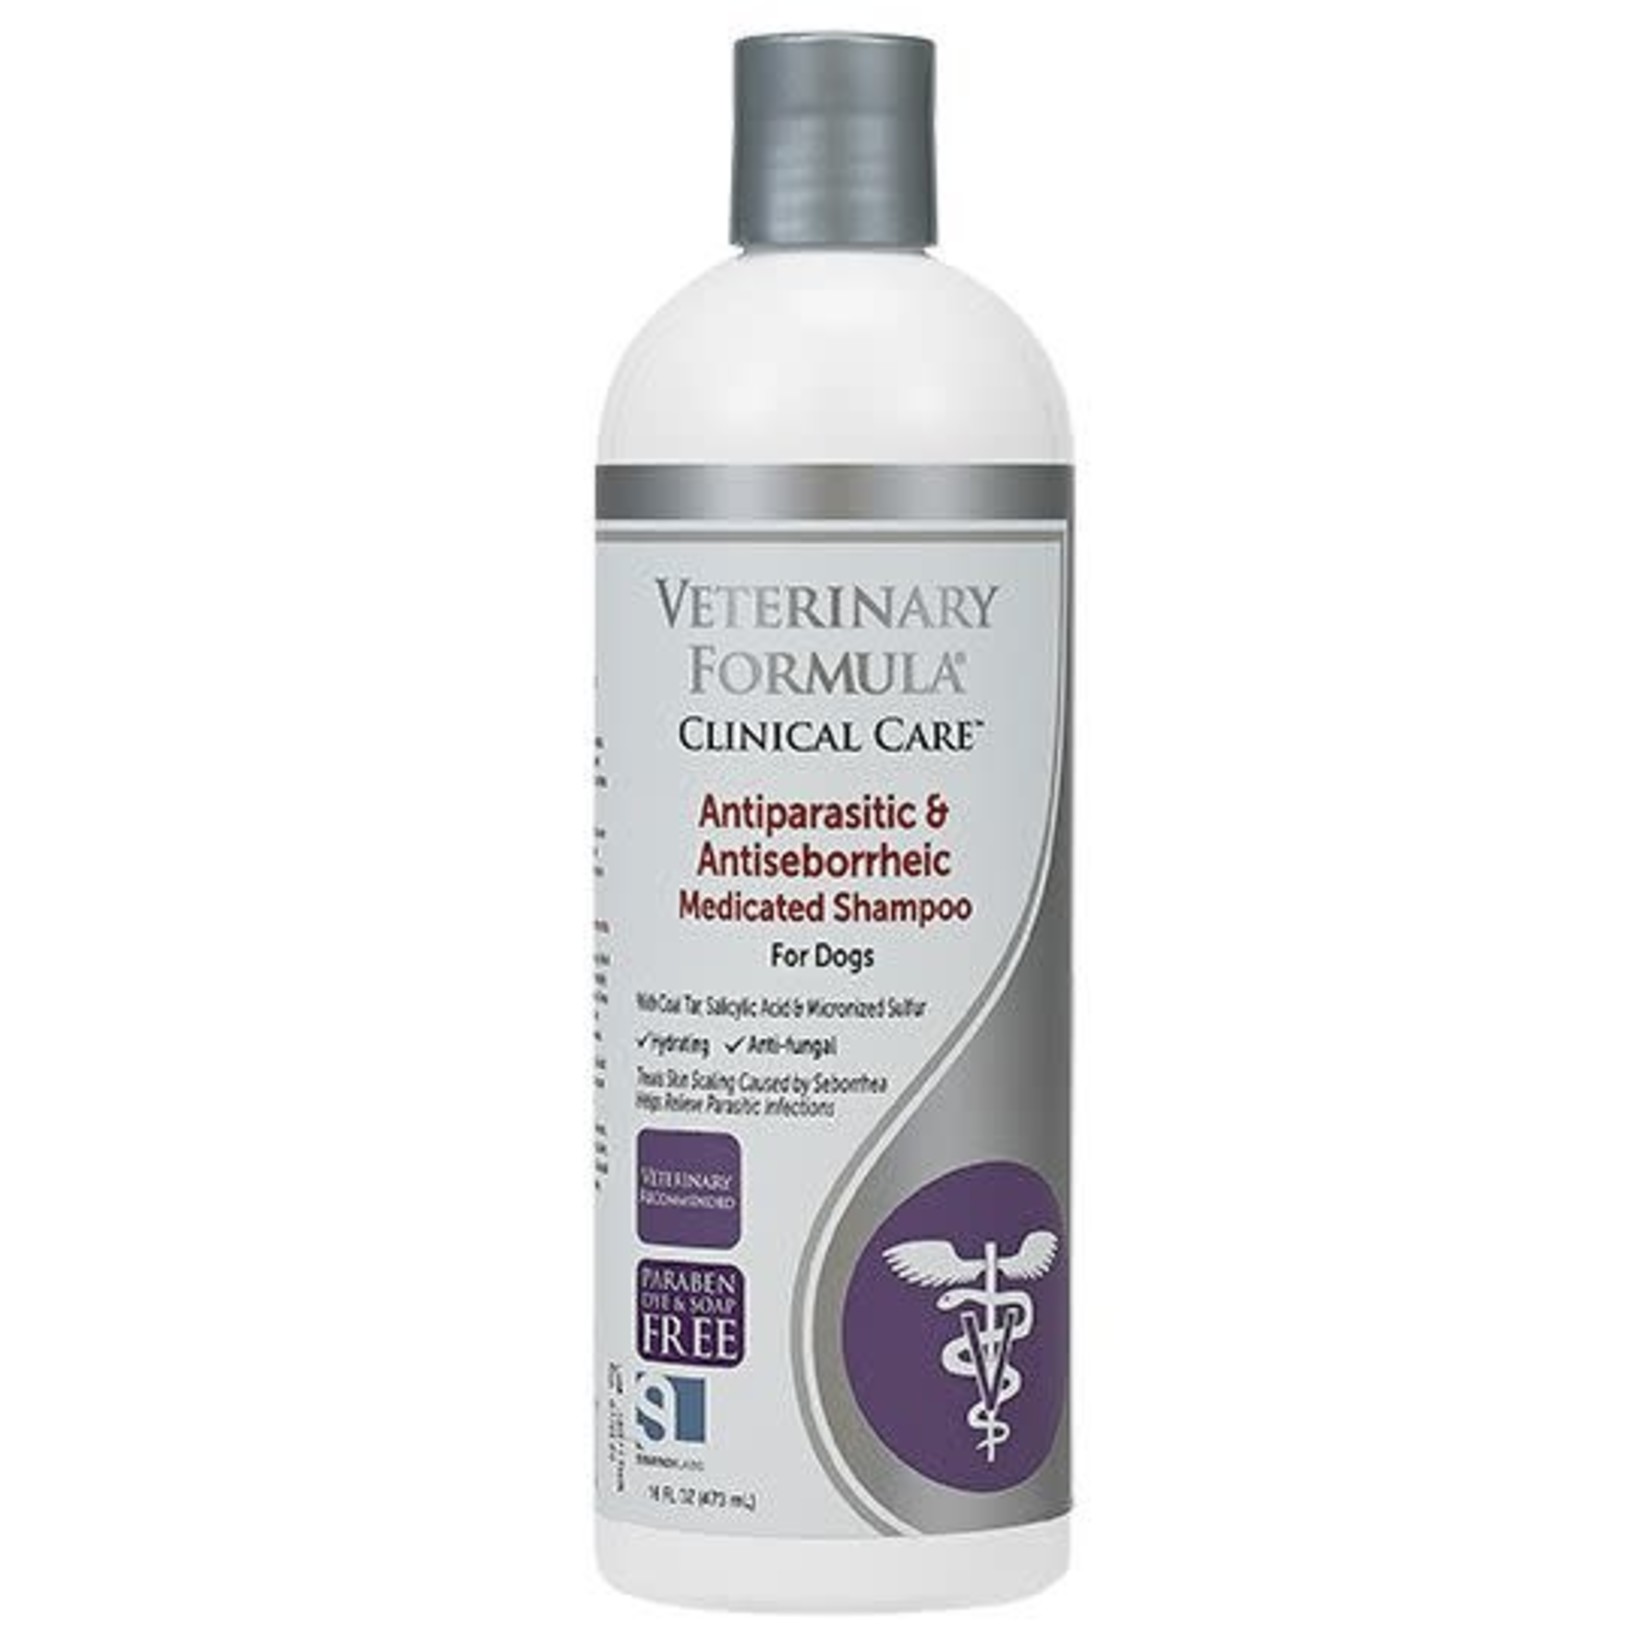 Veterinary Formula Medicated Shampoo For Dogs - 16oz